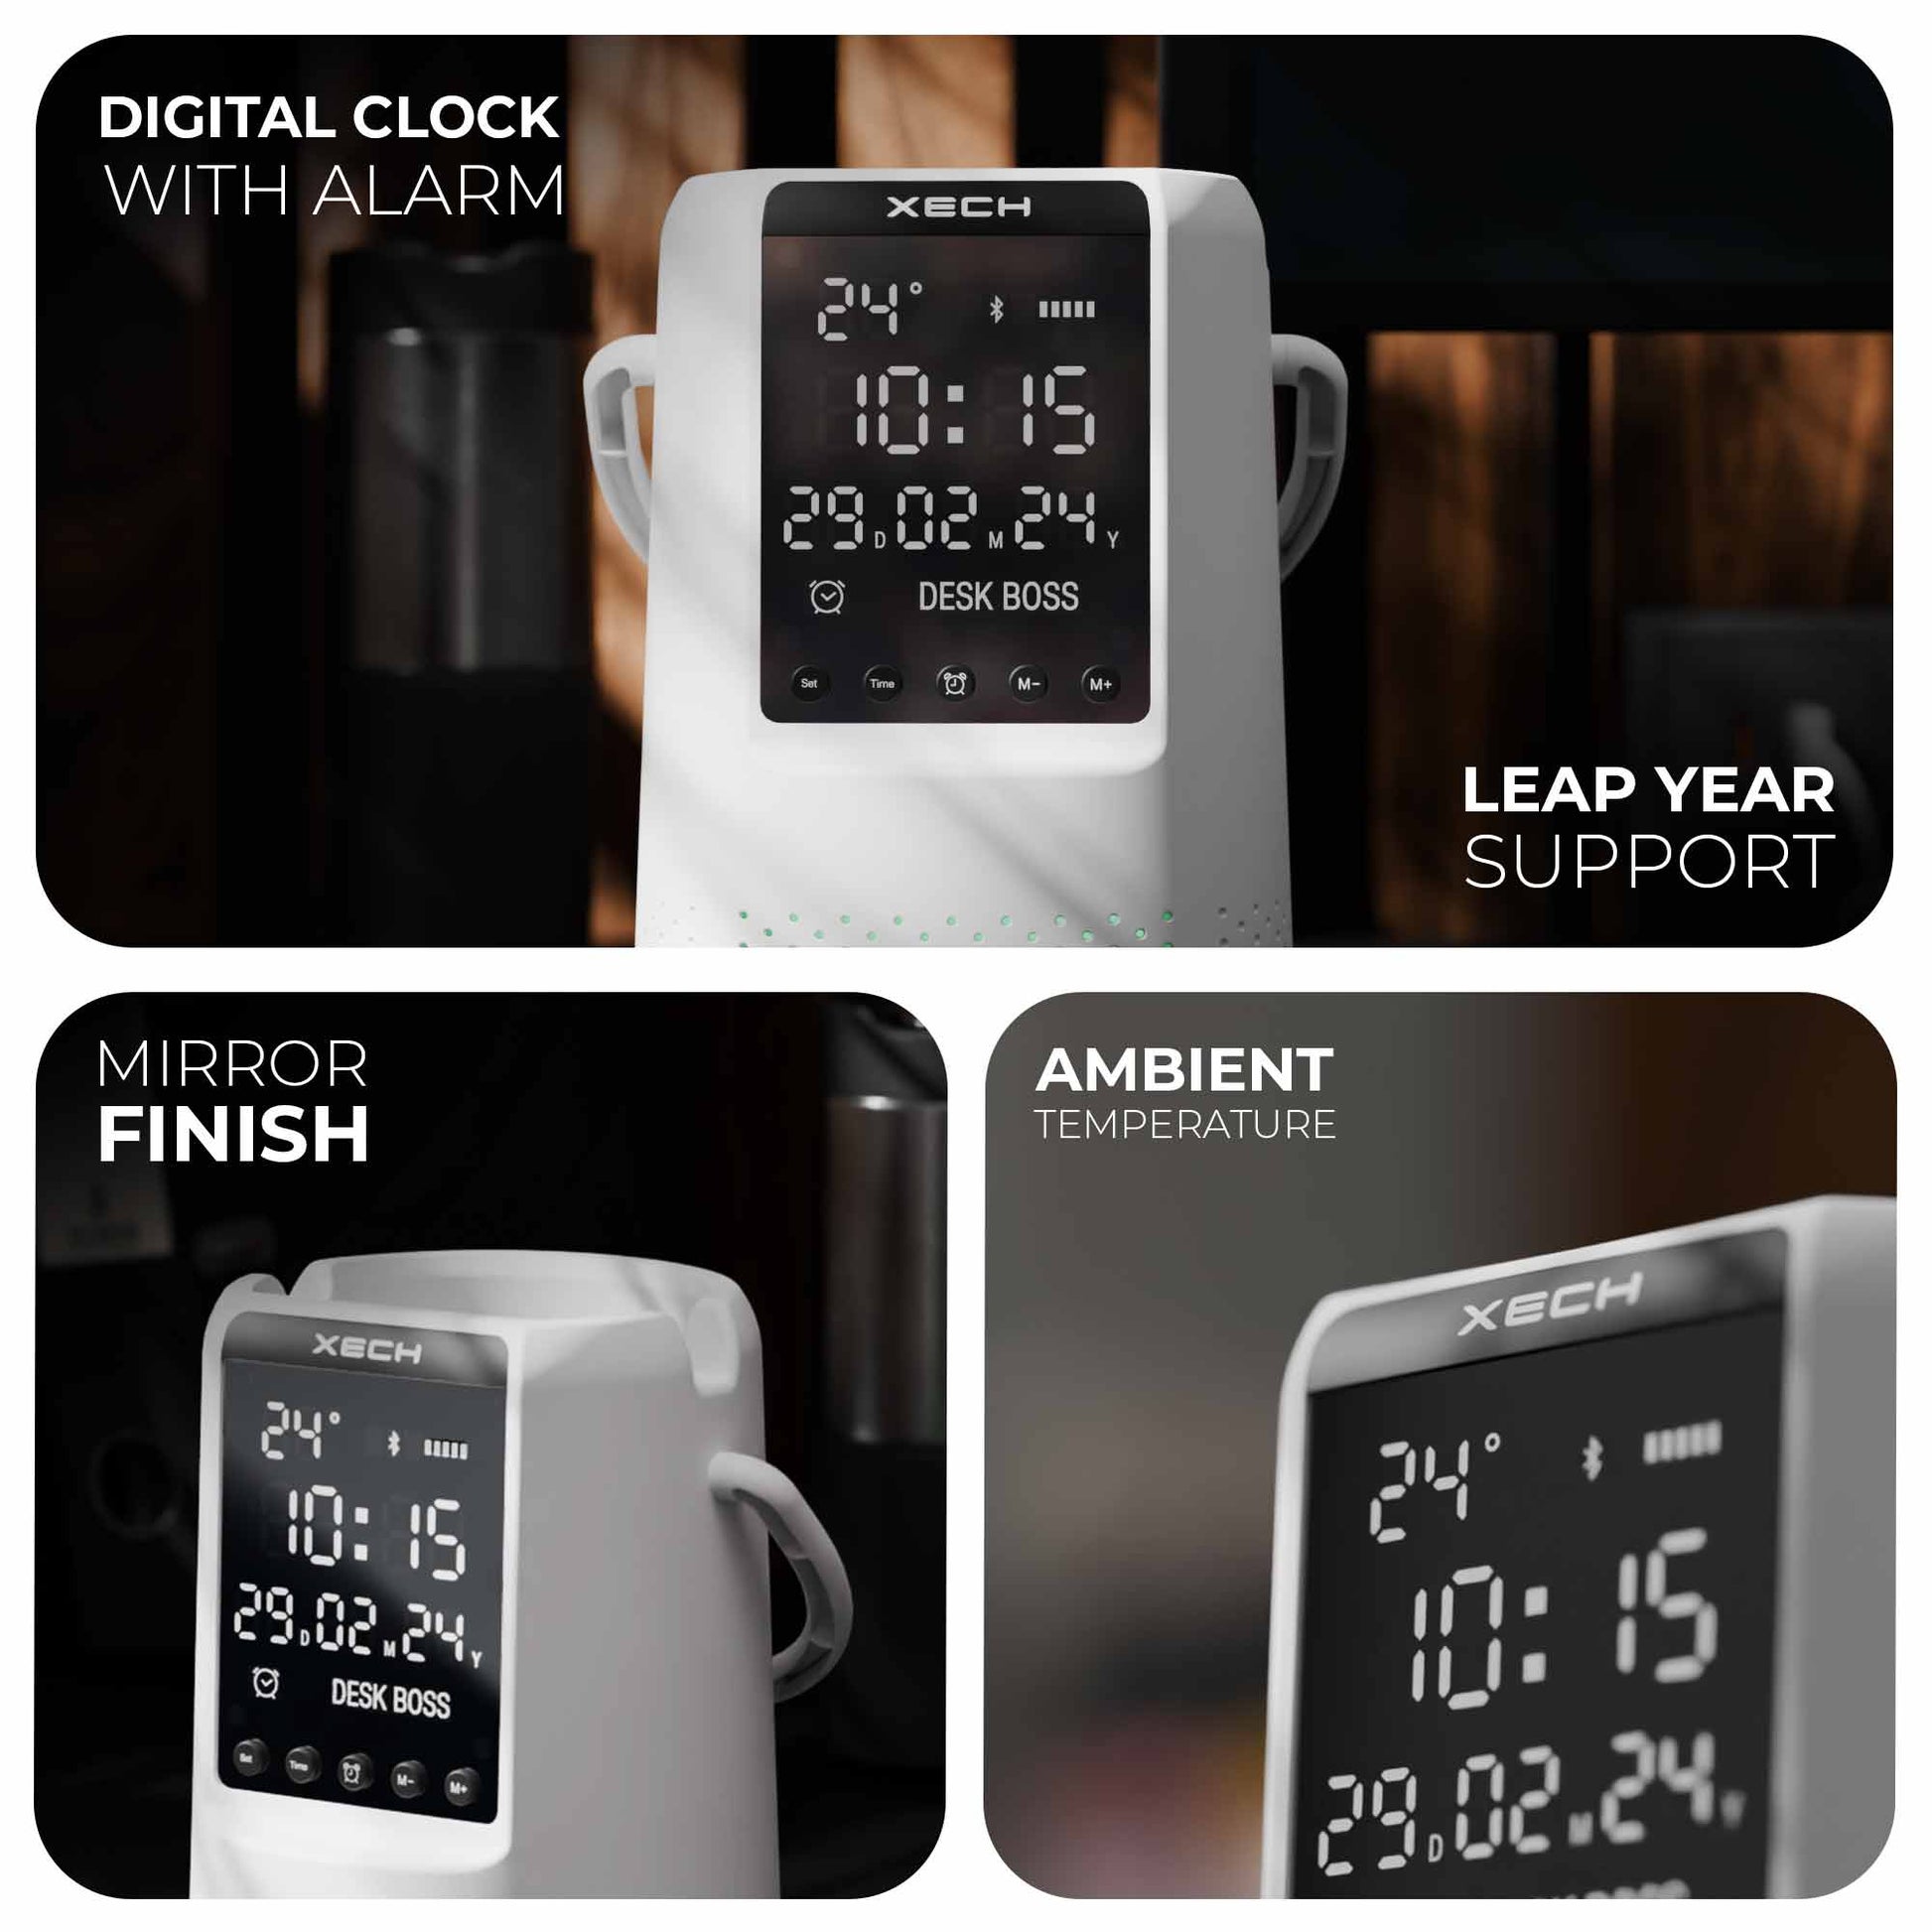 XECH Deskboss digital alarm clock with temperature sensor and mirror finish clock face